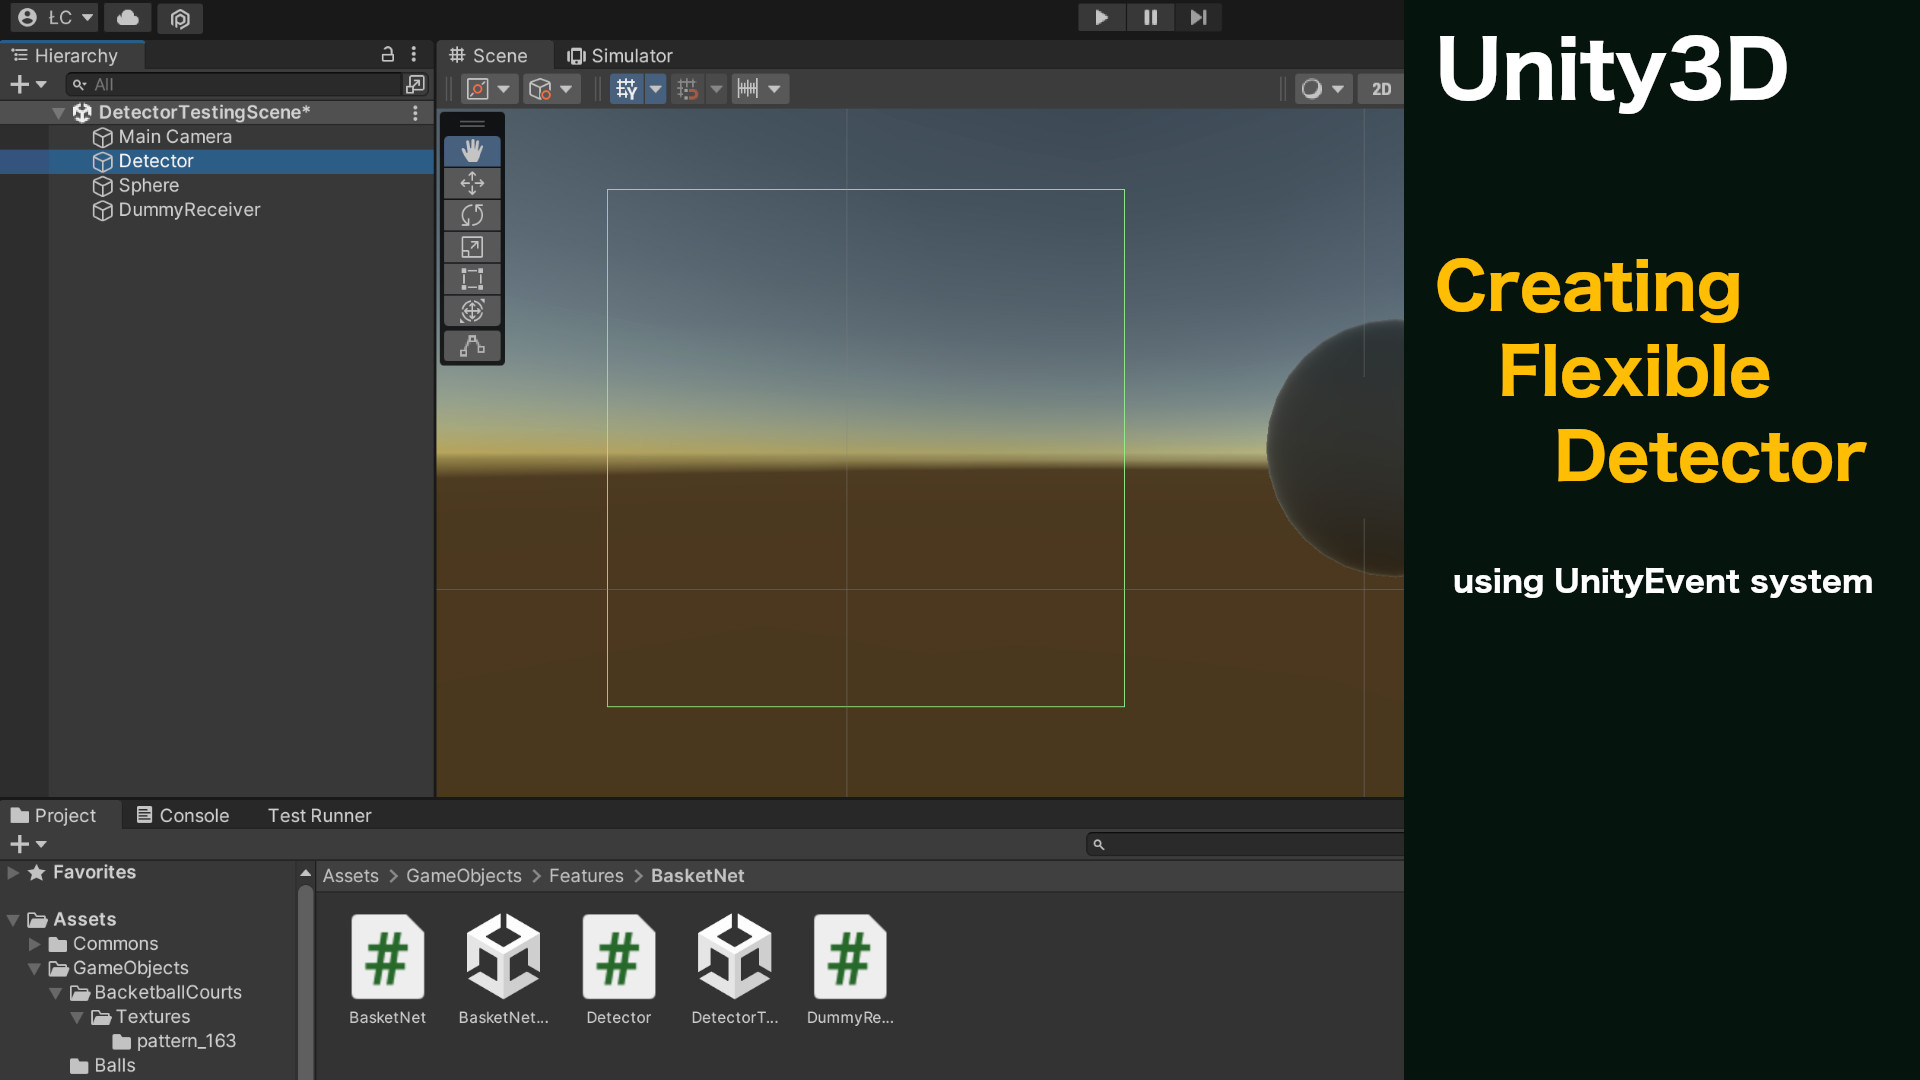 You are currently viewing Unity3D: Budujemy uniwersalny detektor w oparciu o UnityEvent system